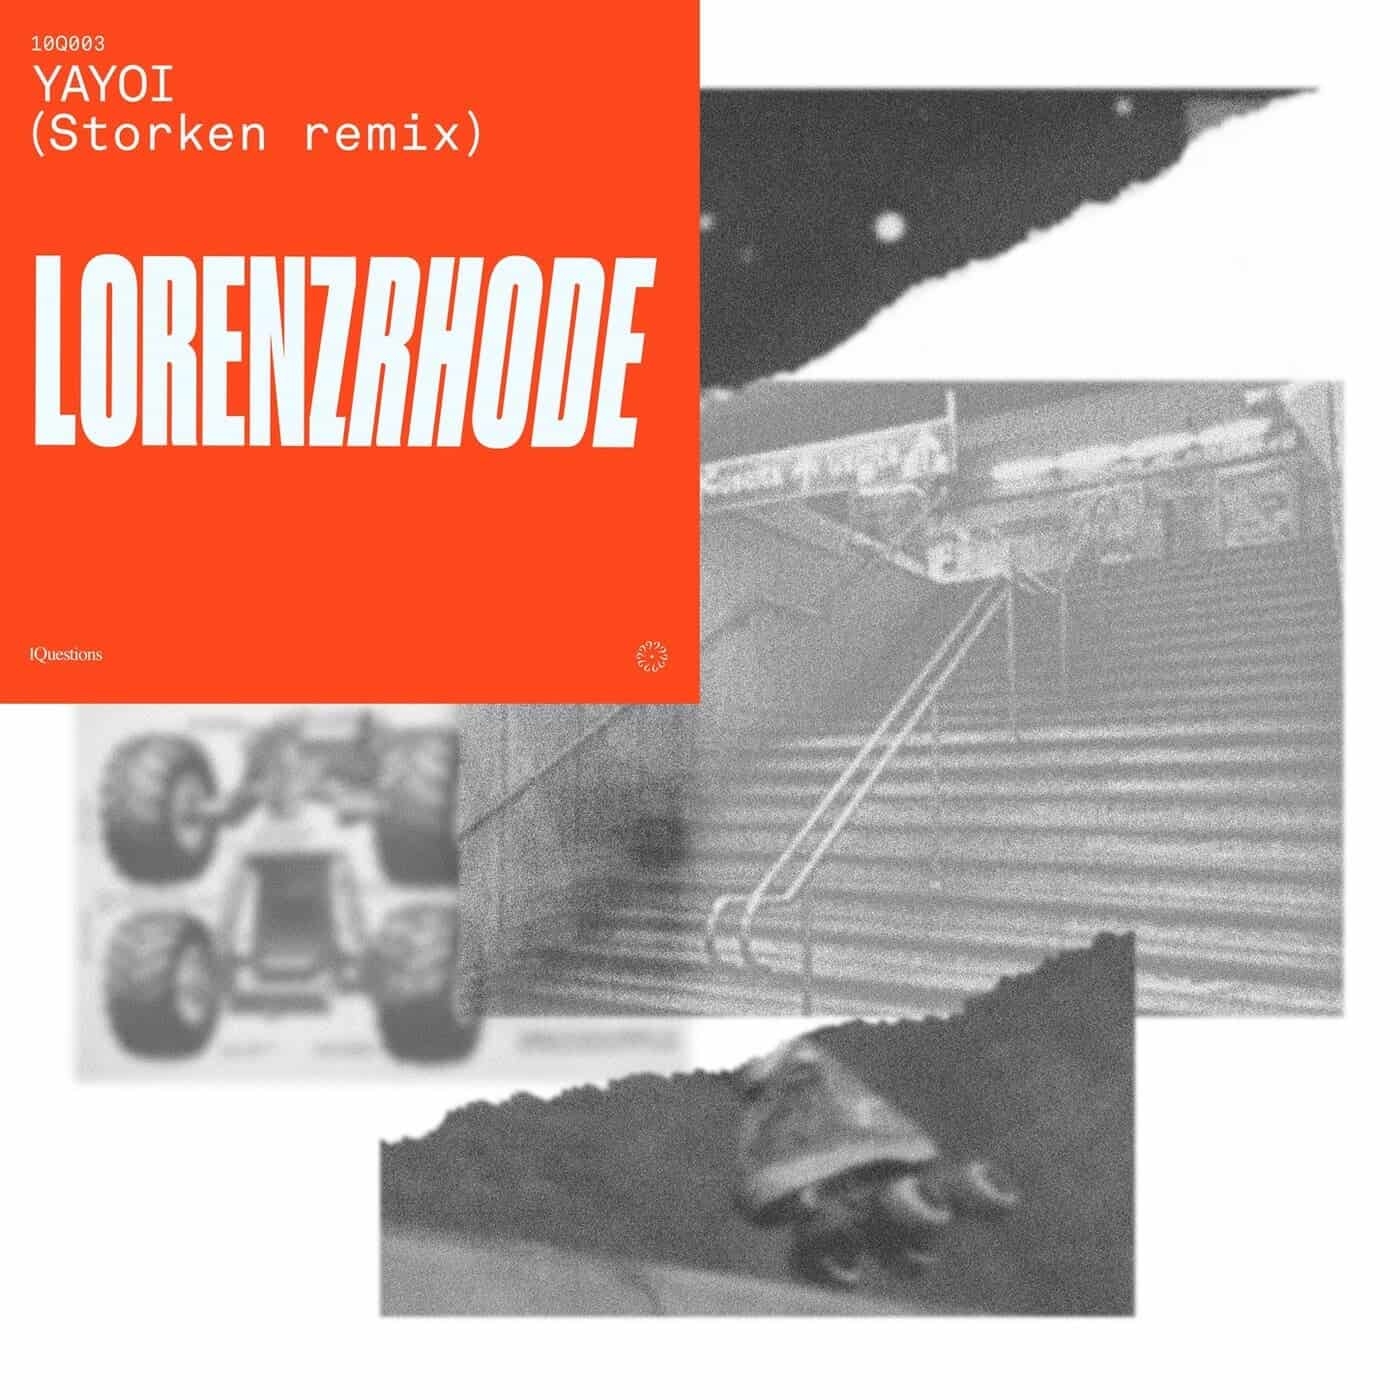 Download Lorenz Rhode - Yayoi (Storken Remix) on Electrobuzz